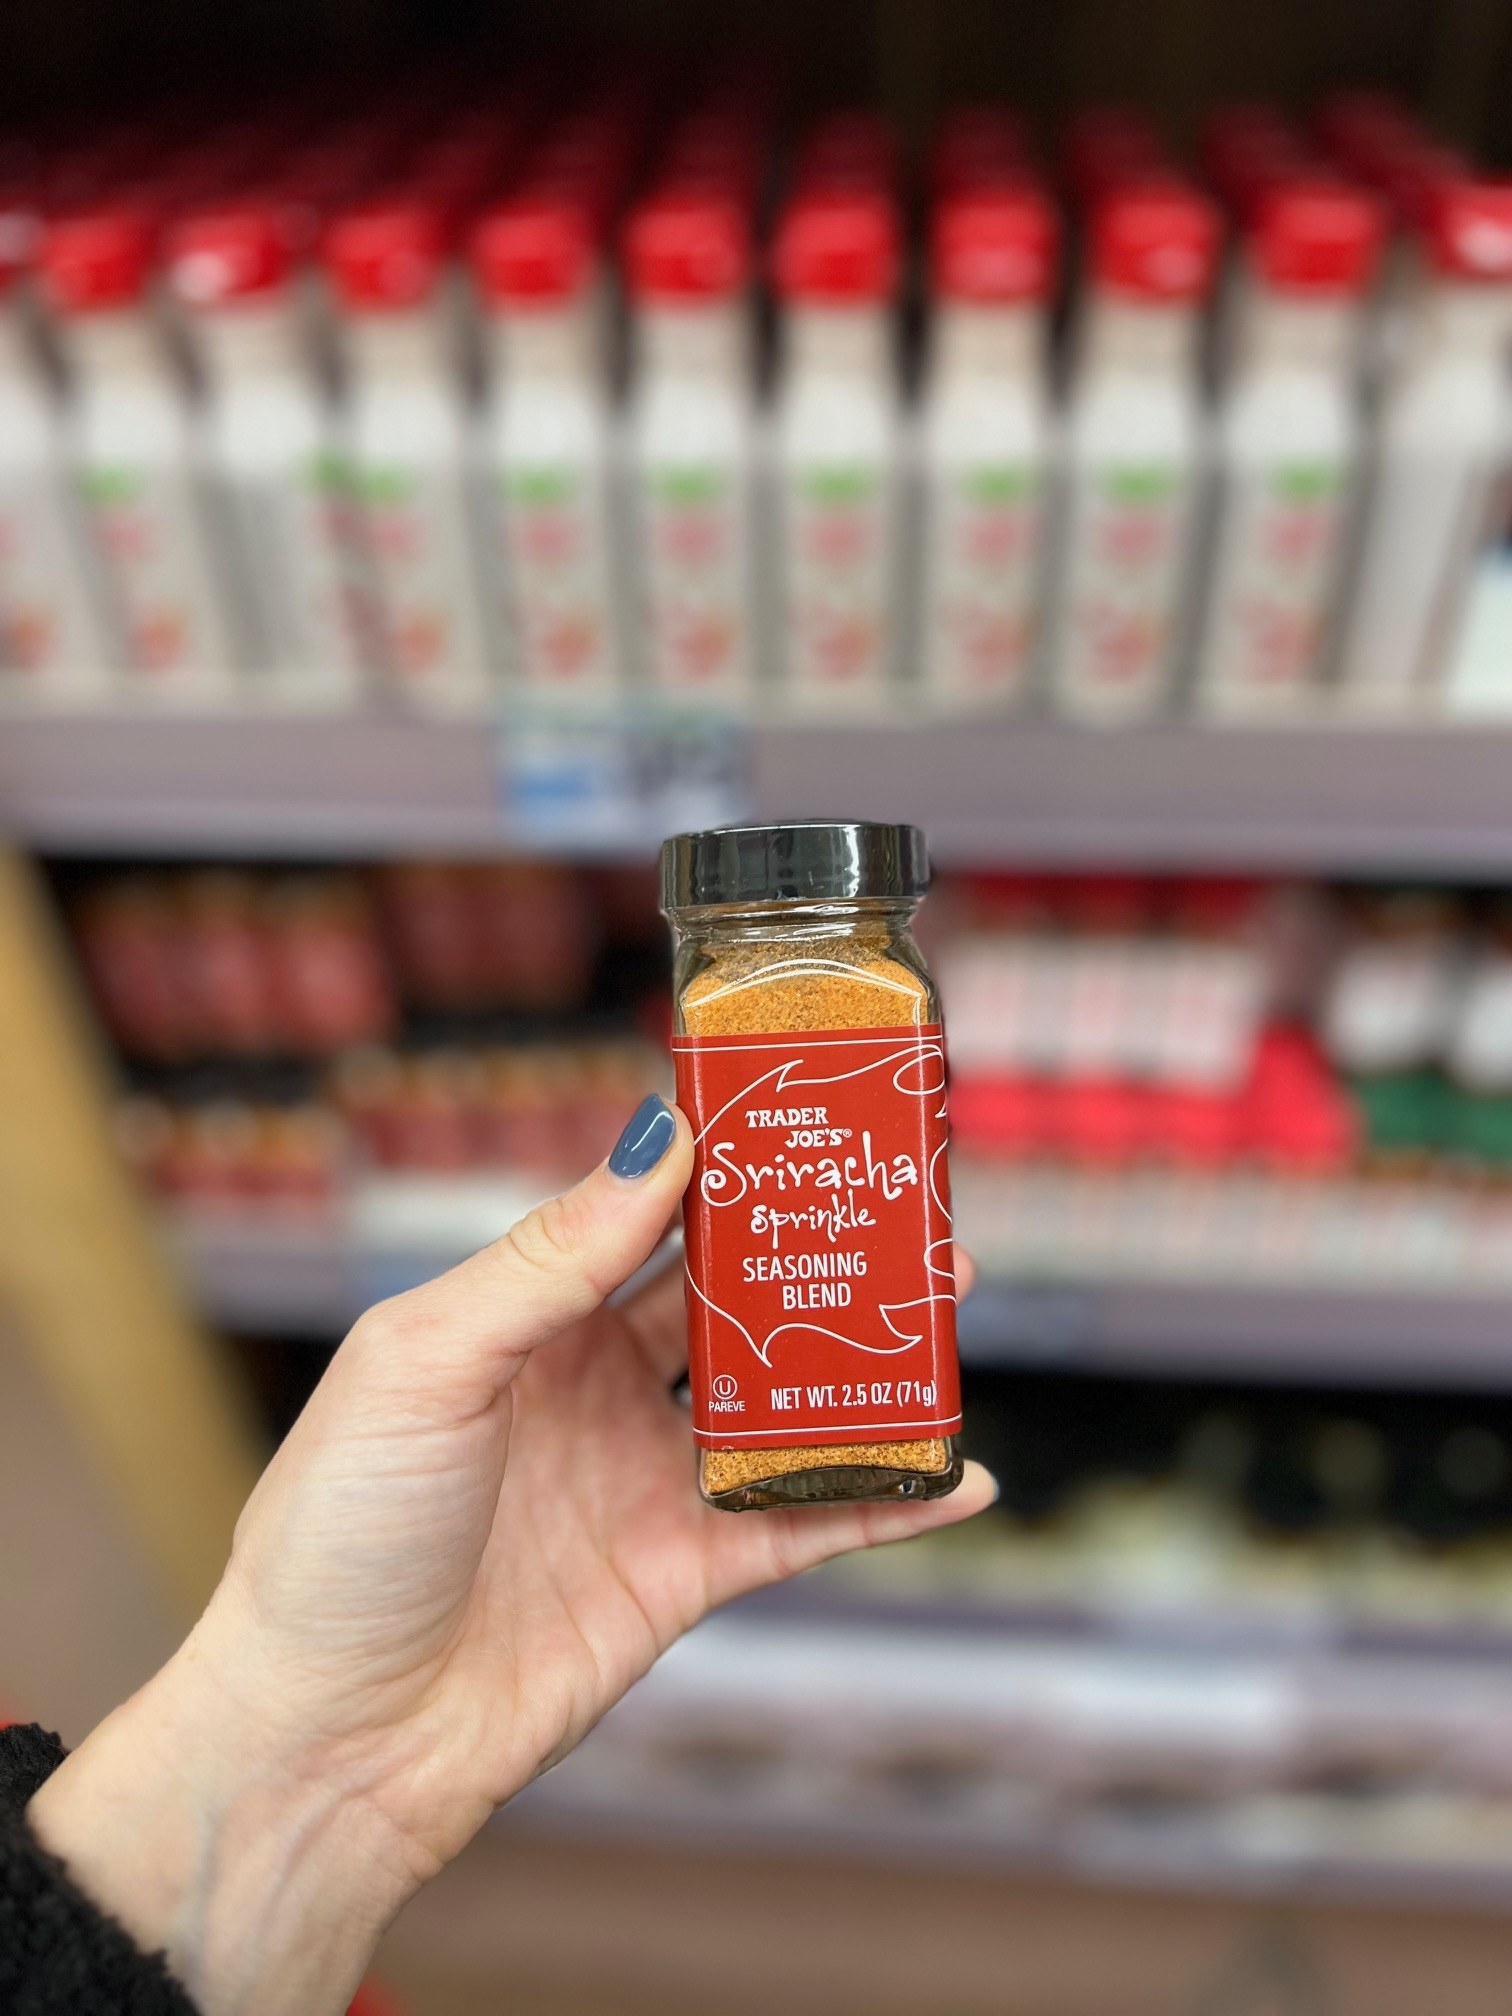 A small jar of Sriracha Sprinkle Seasoning Blend